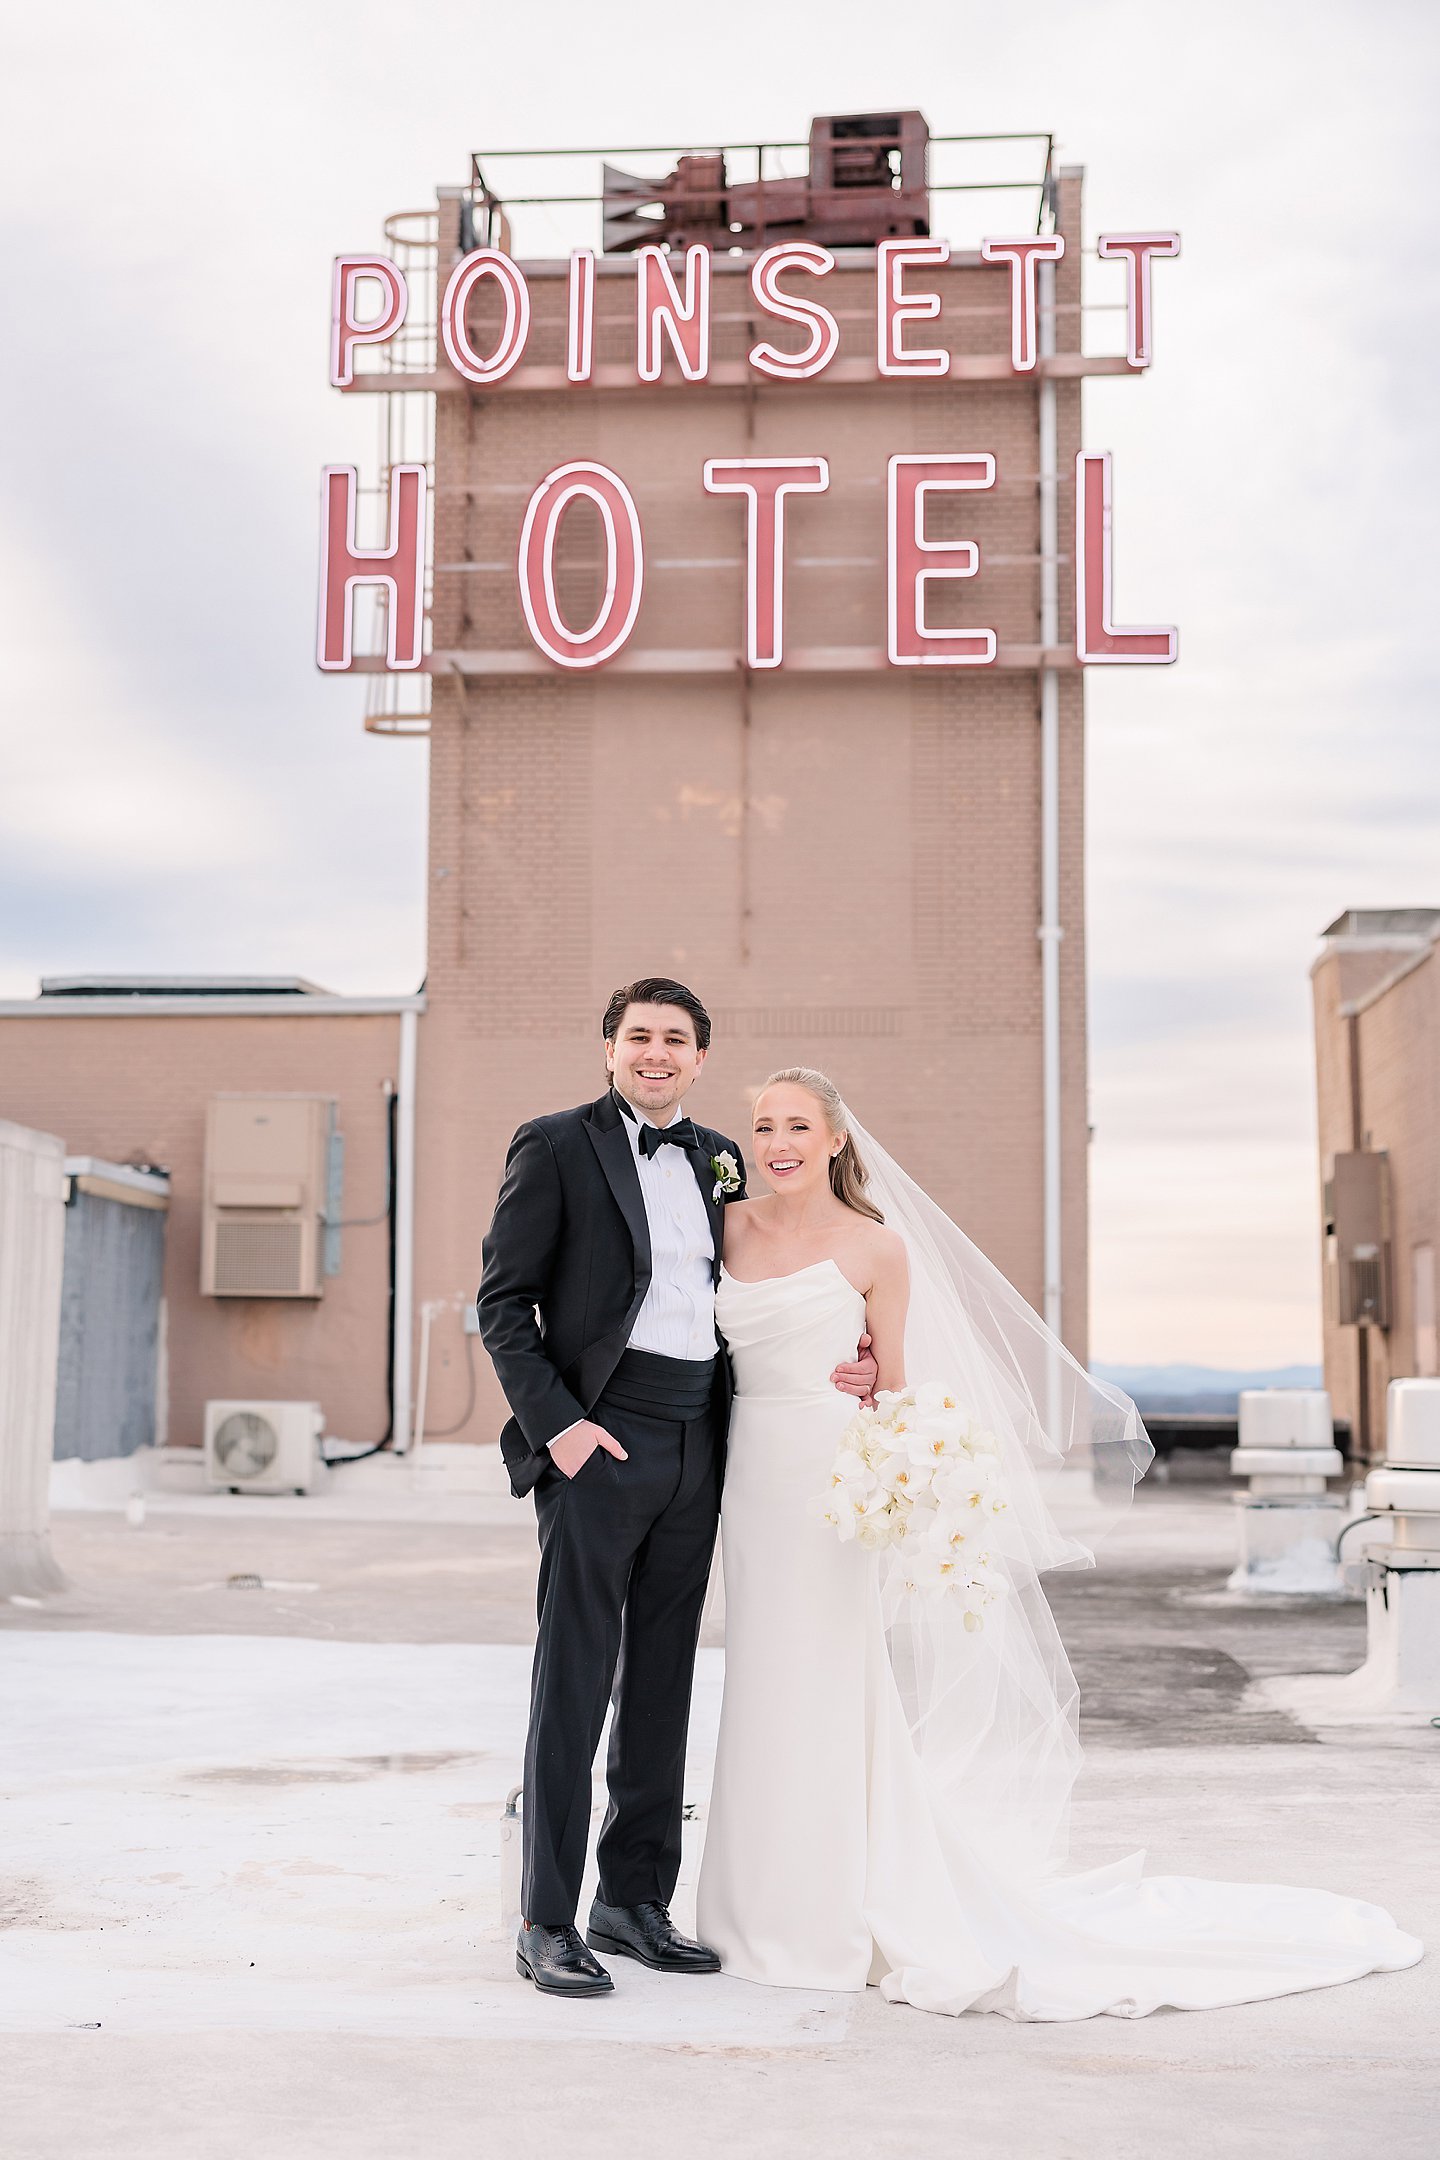 poinsett hotel wedding jennifer stuart photography 0090